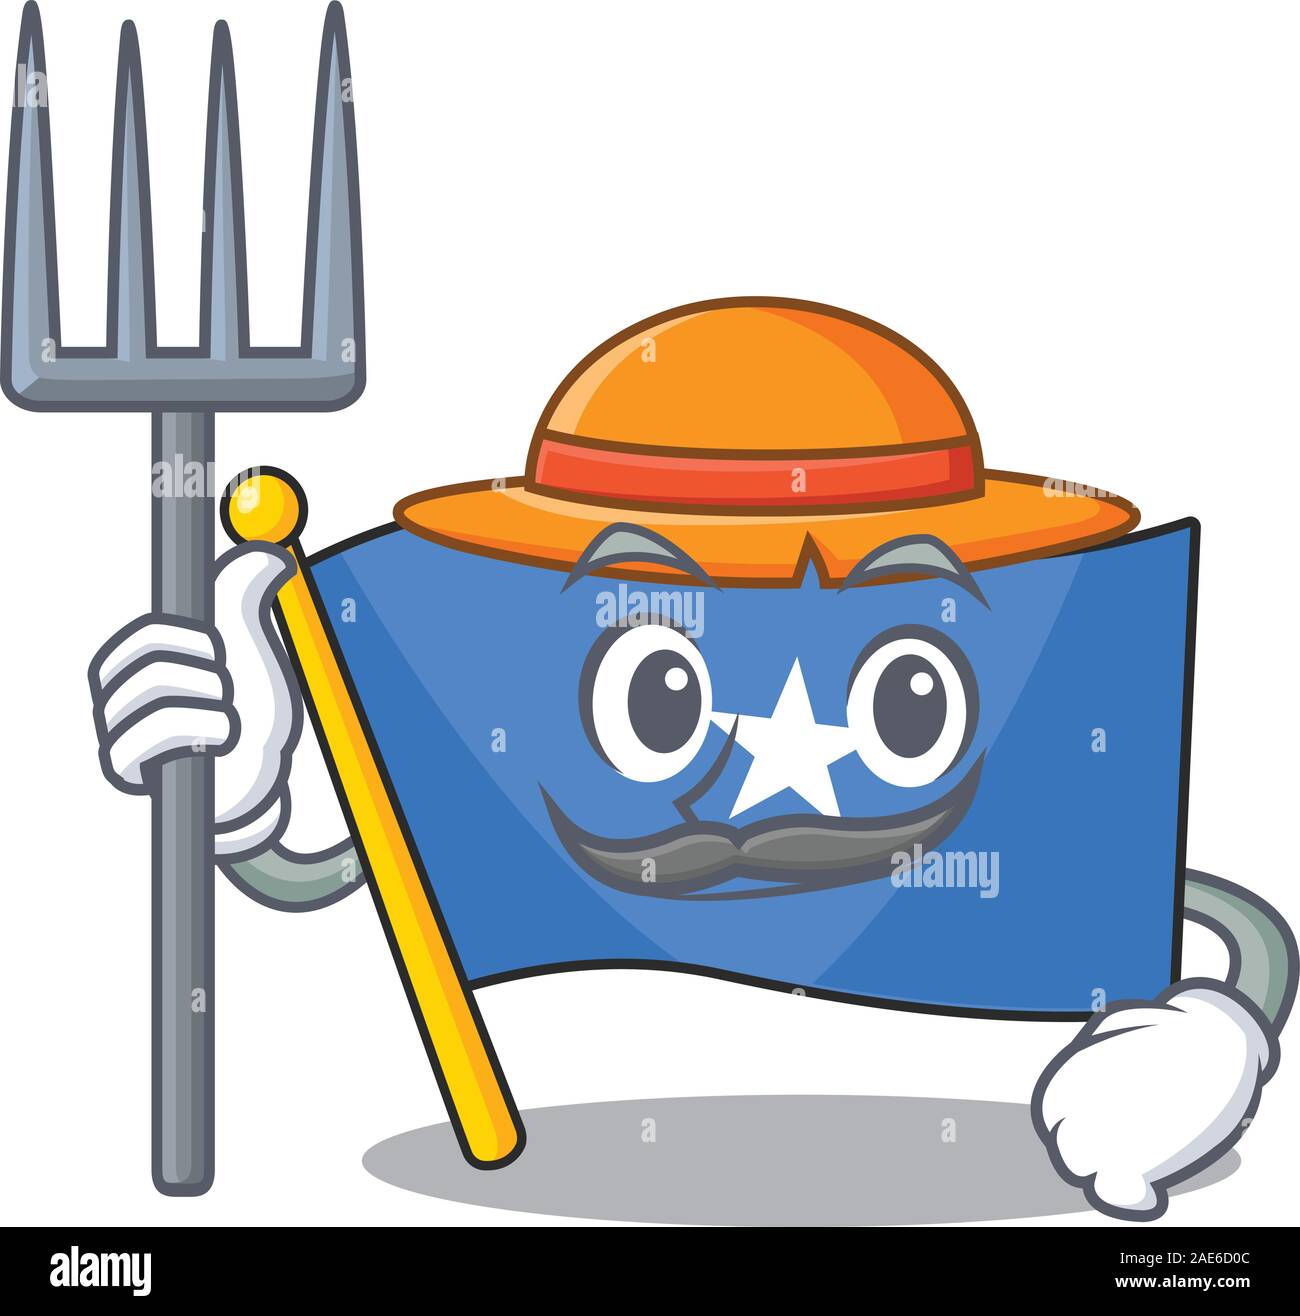 Farmer flag somalia cartoon character with hat and tools Stock Vector